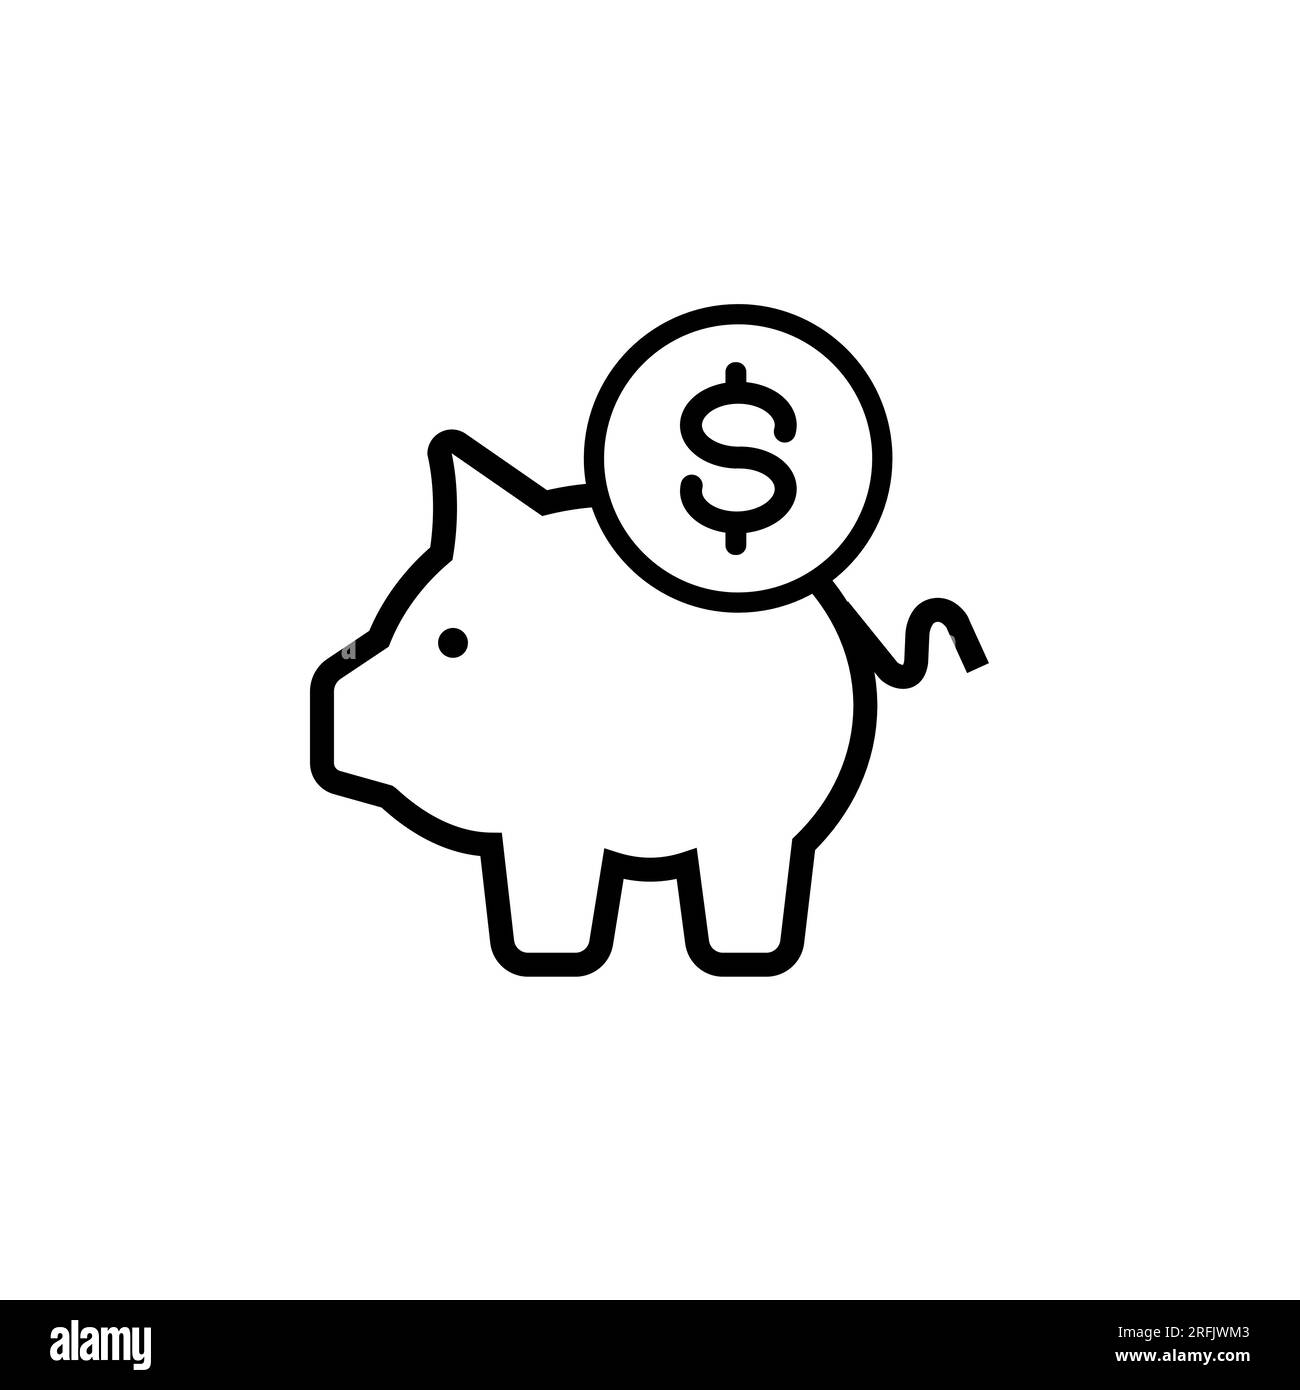 Piggy bank, dollar coin Business icon. Piggy bank savings account icon vector graphic illustration Stock Vector